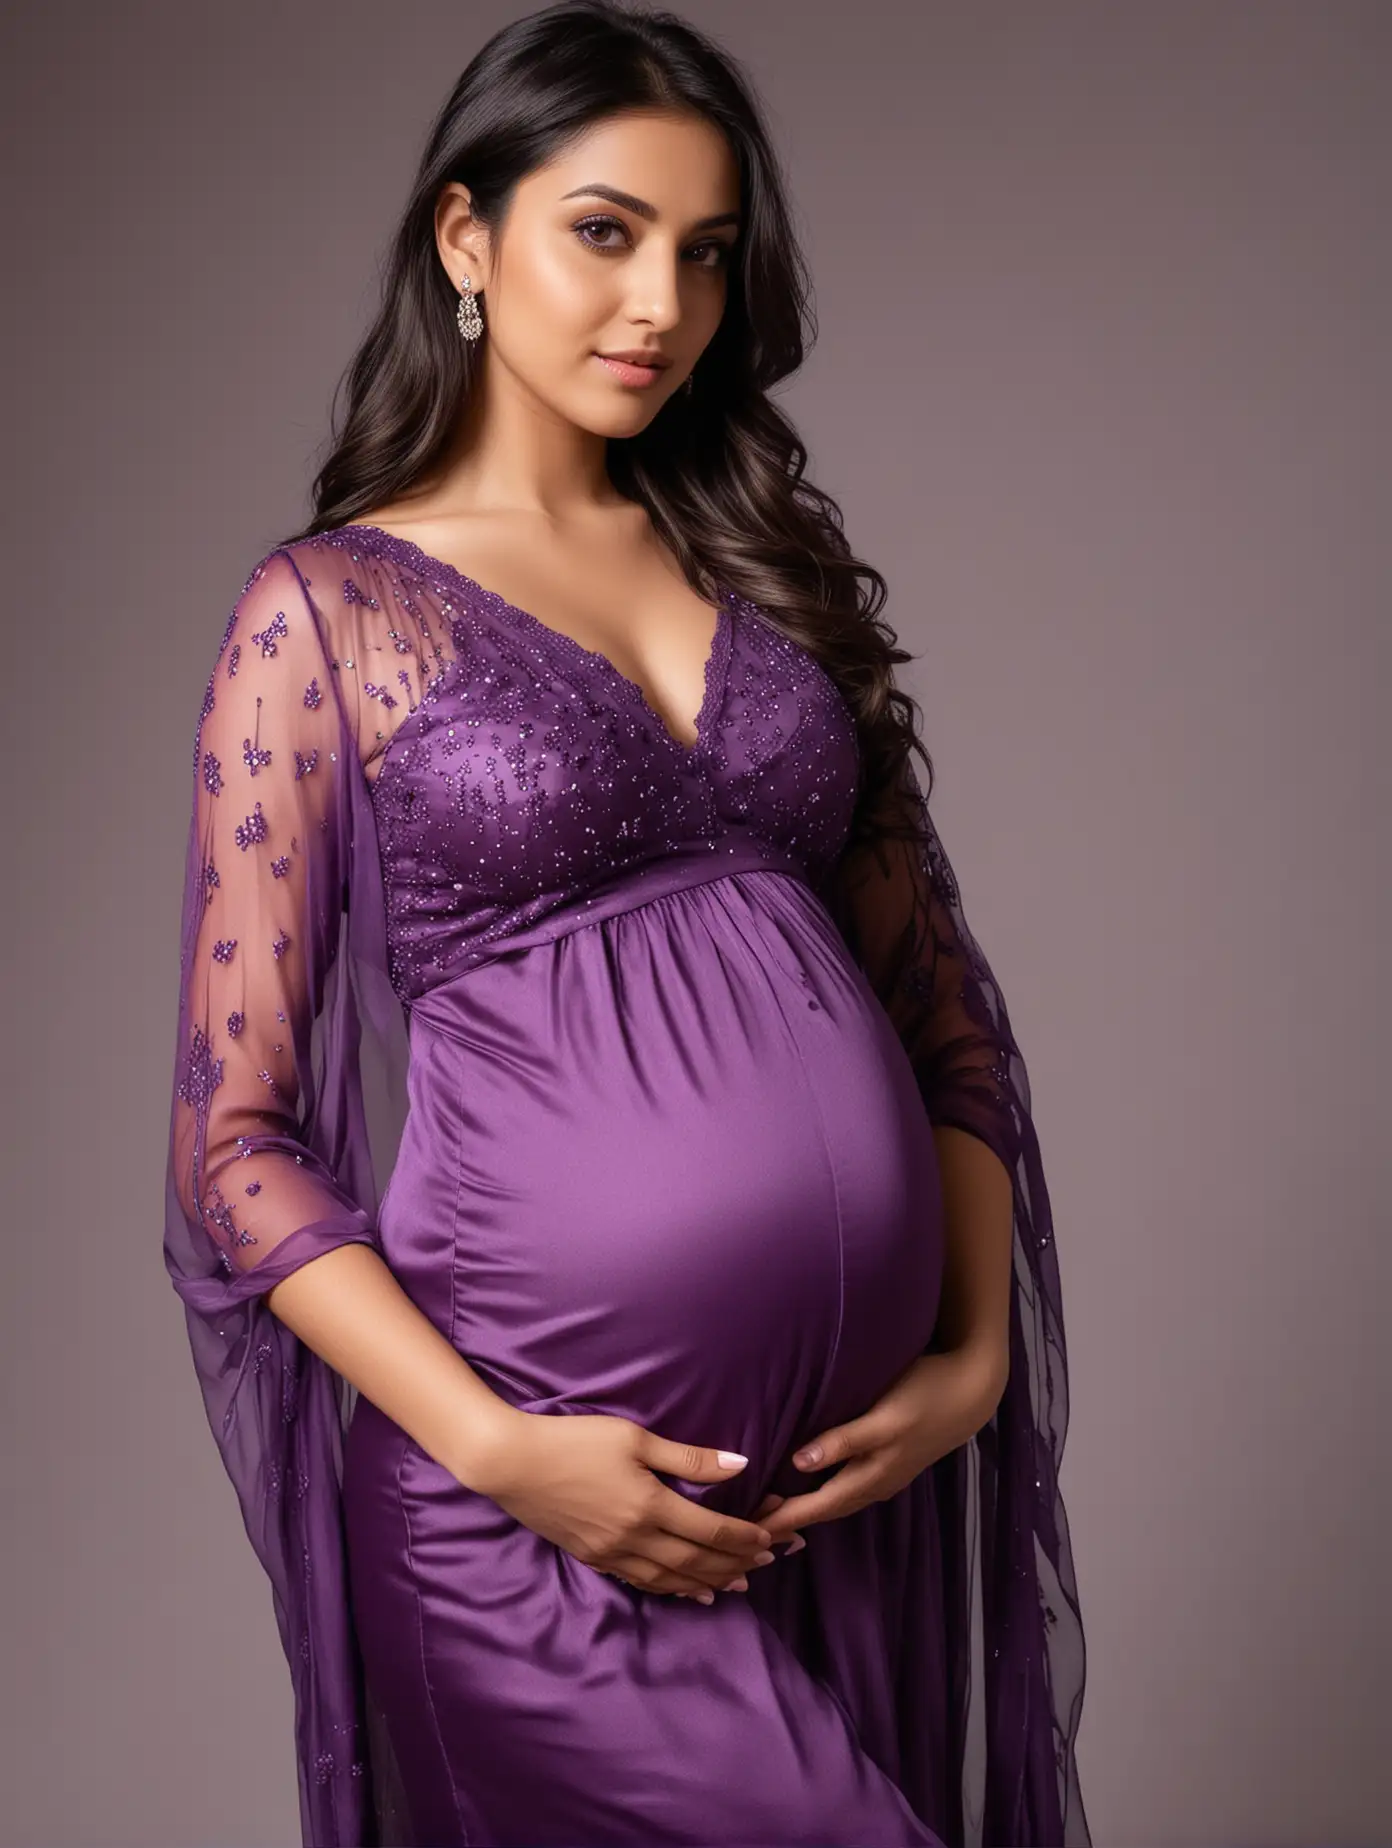 Exquisite Pregnant Woman in Purple Satin Dress